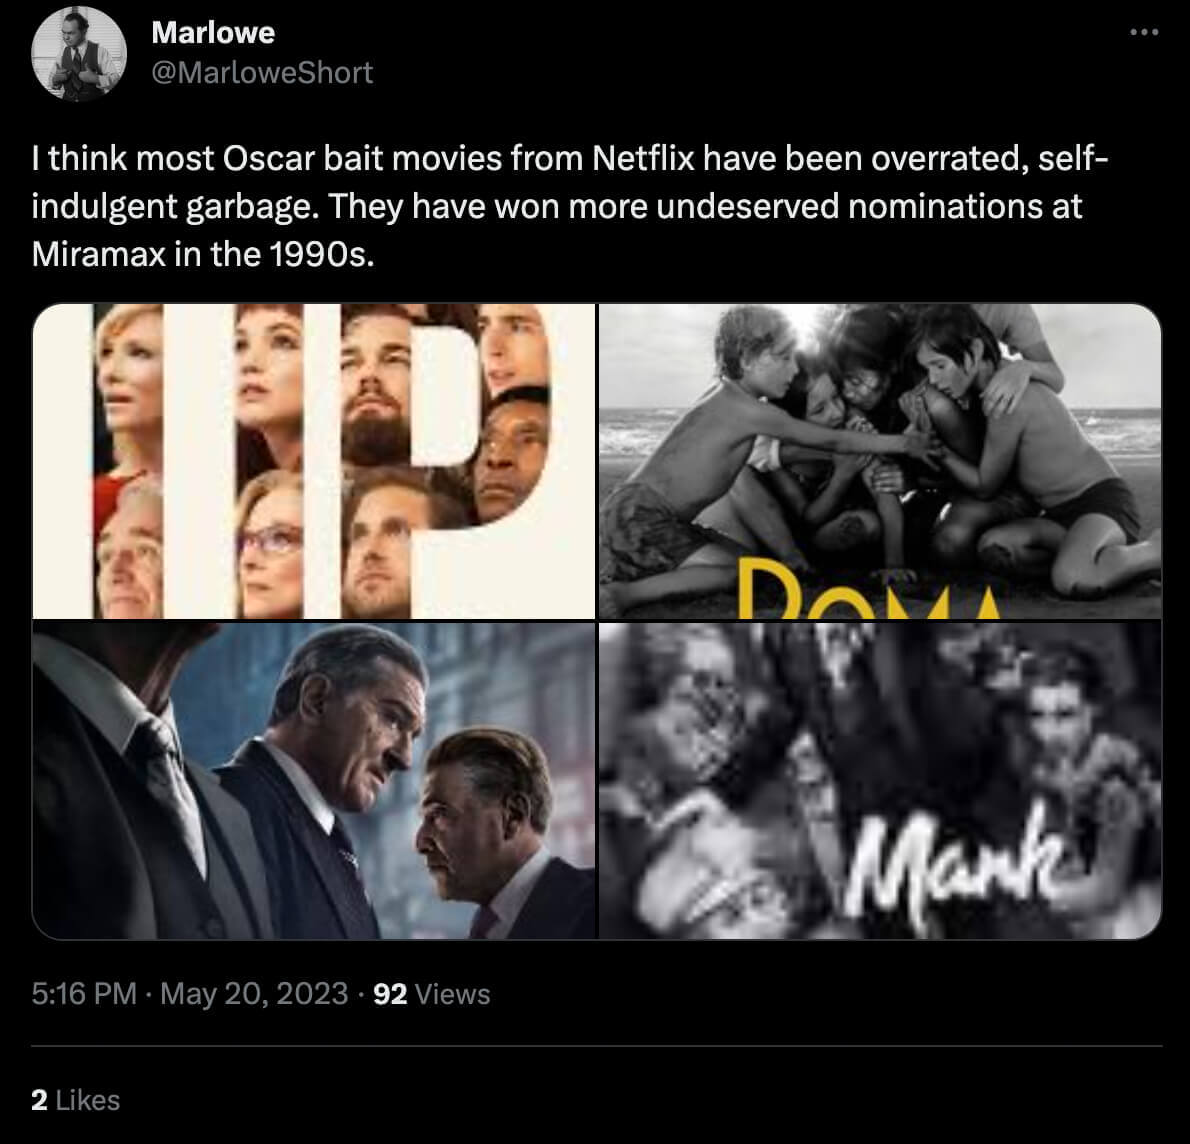 Tweet from a user annoyed by Netflix Oscar bait